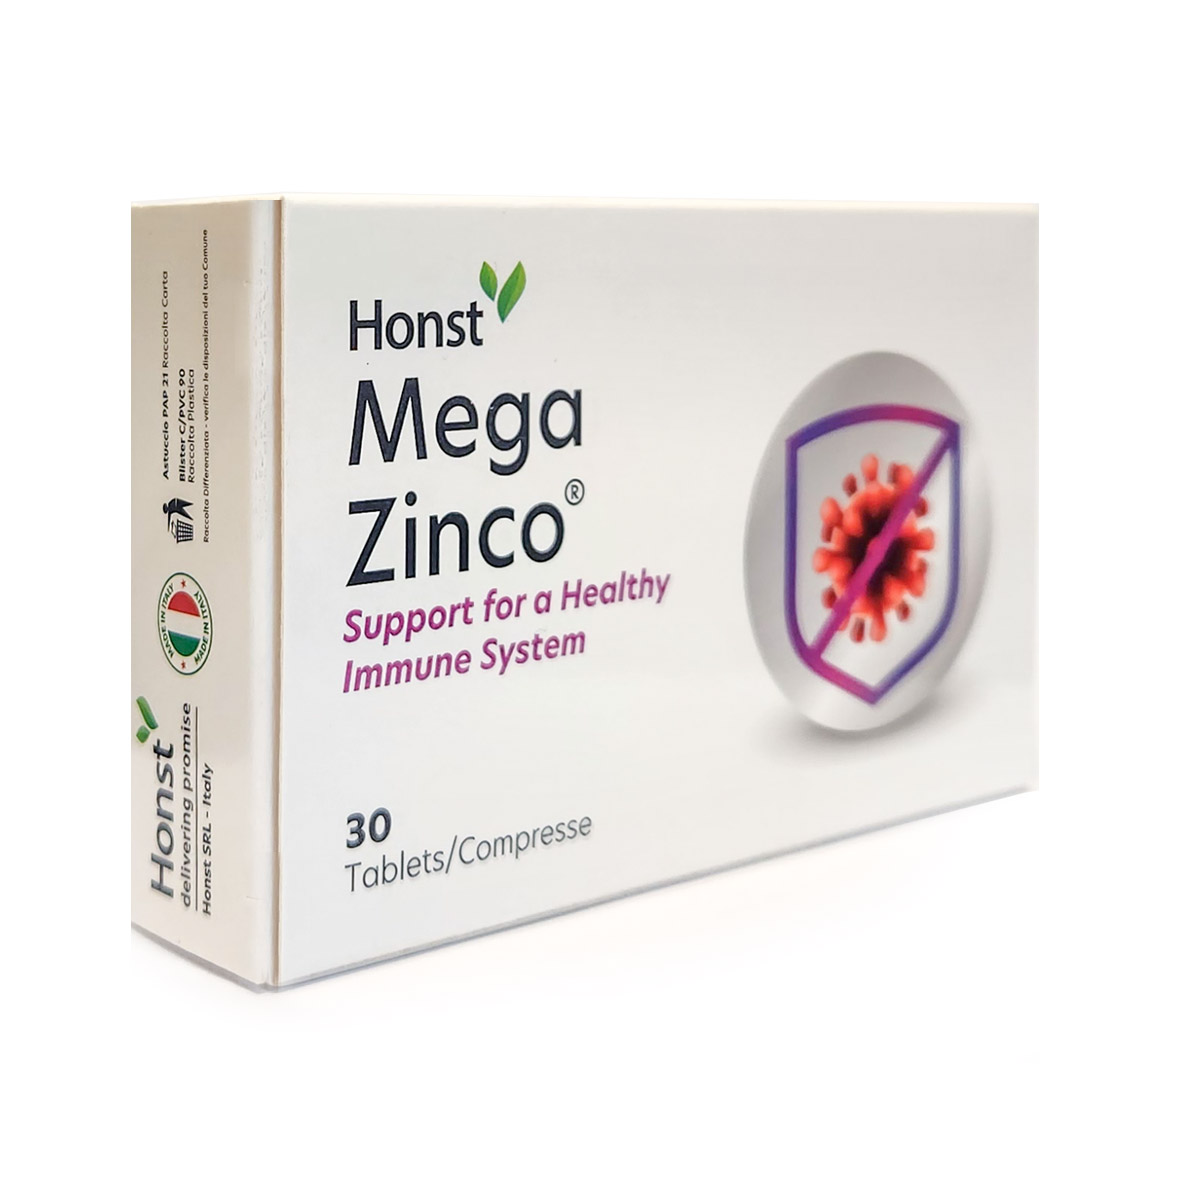 Mega Zinco 30 Tablets/Compresse